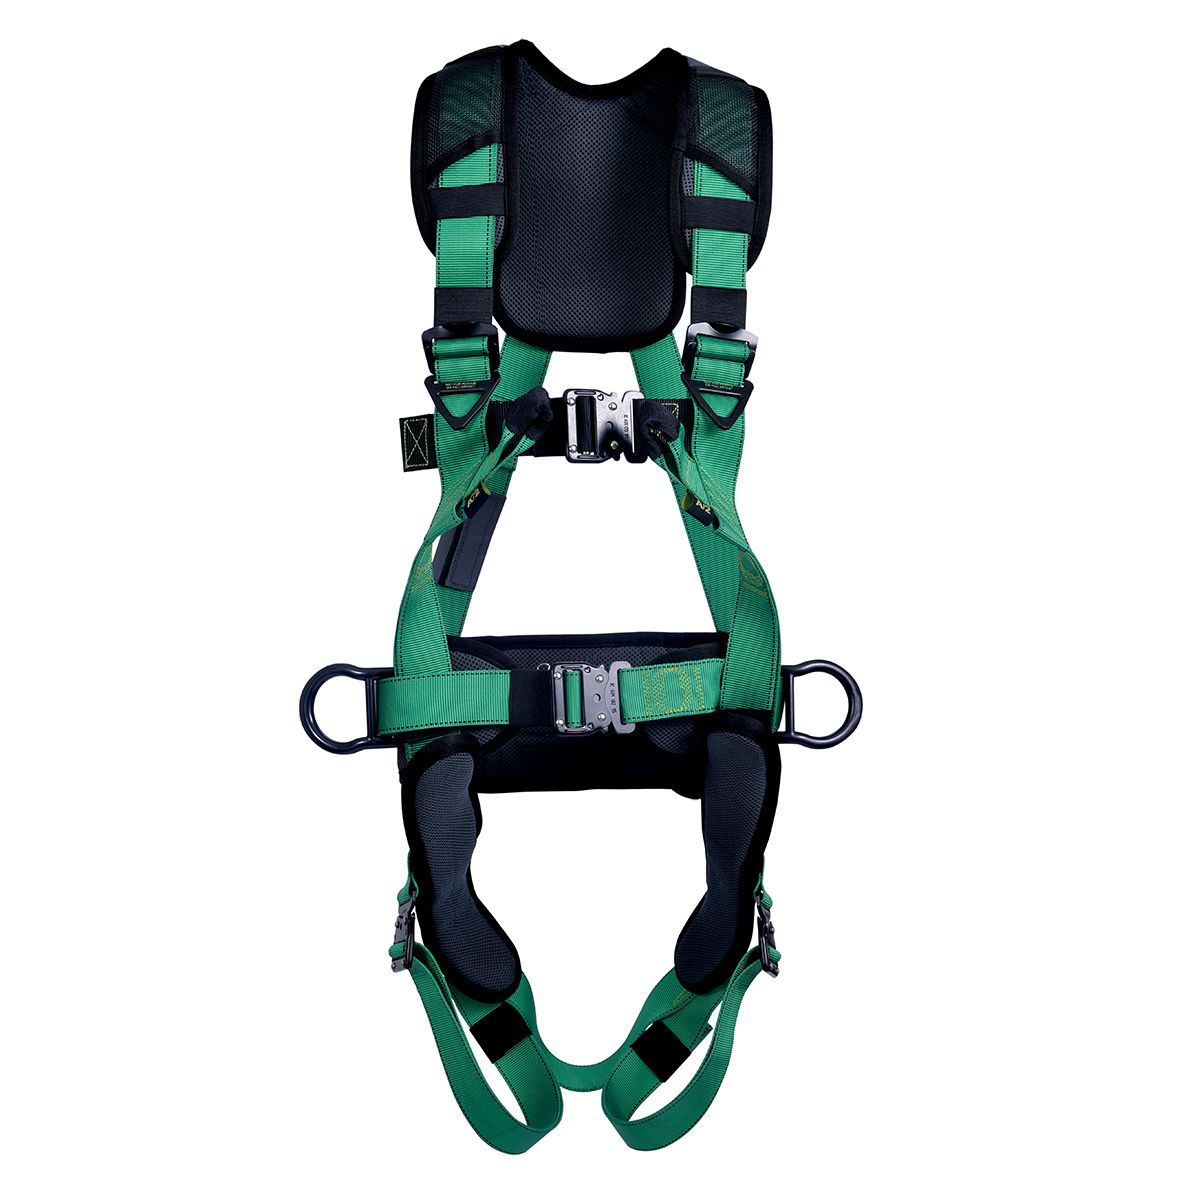 SALE: MSA Safety V-Fit harness, premium version, size S